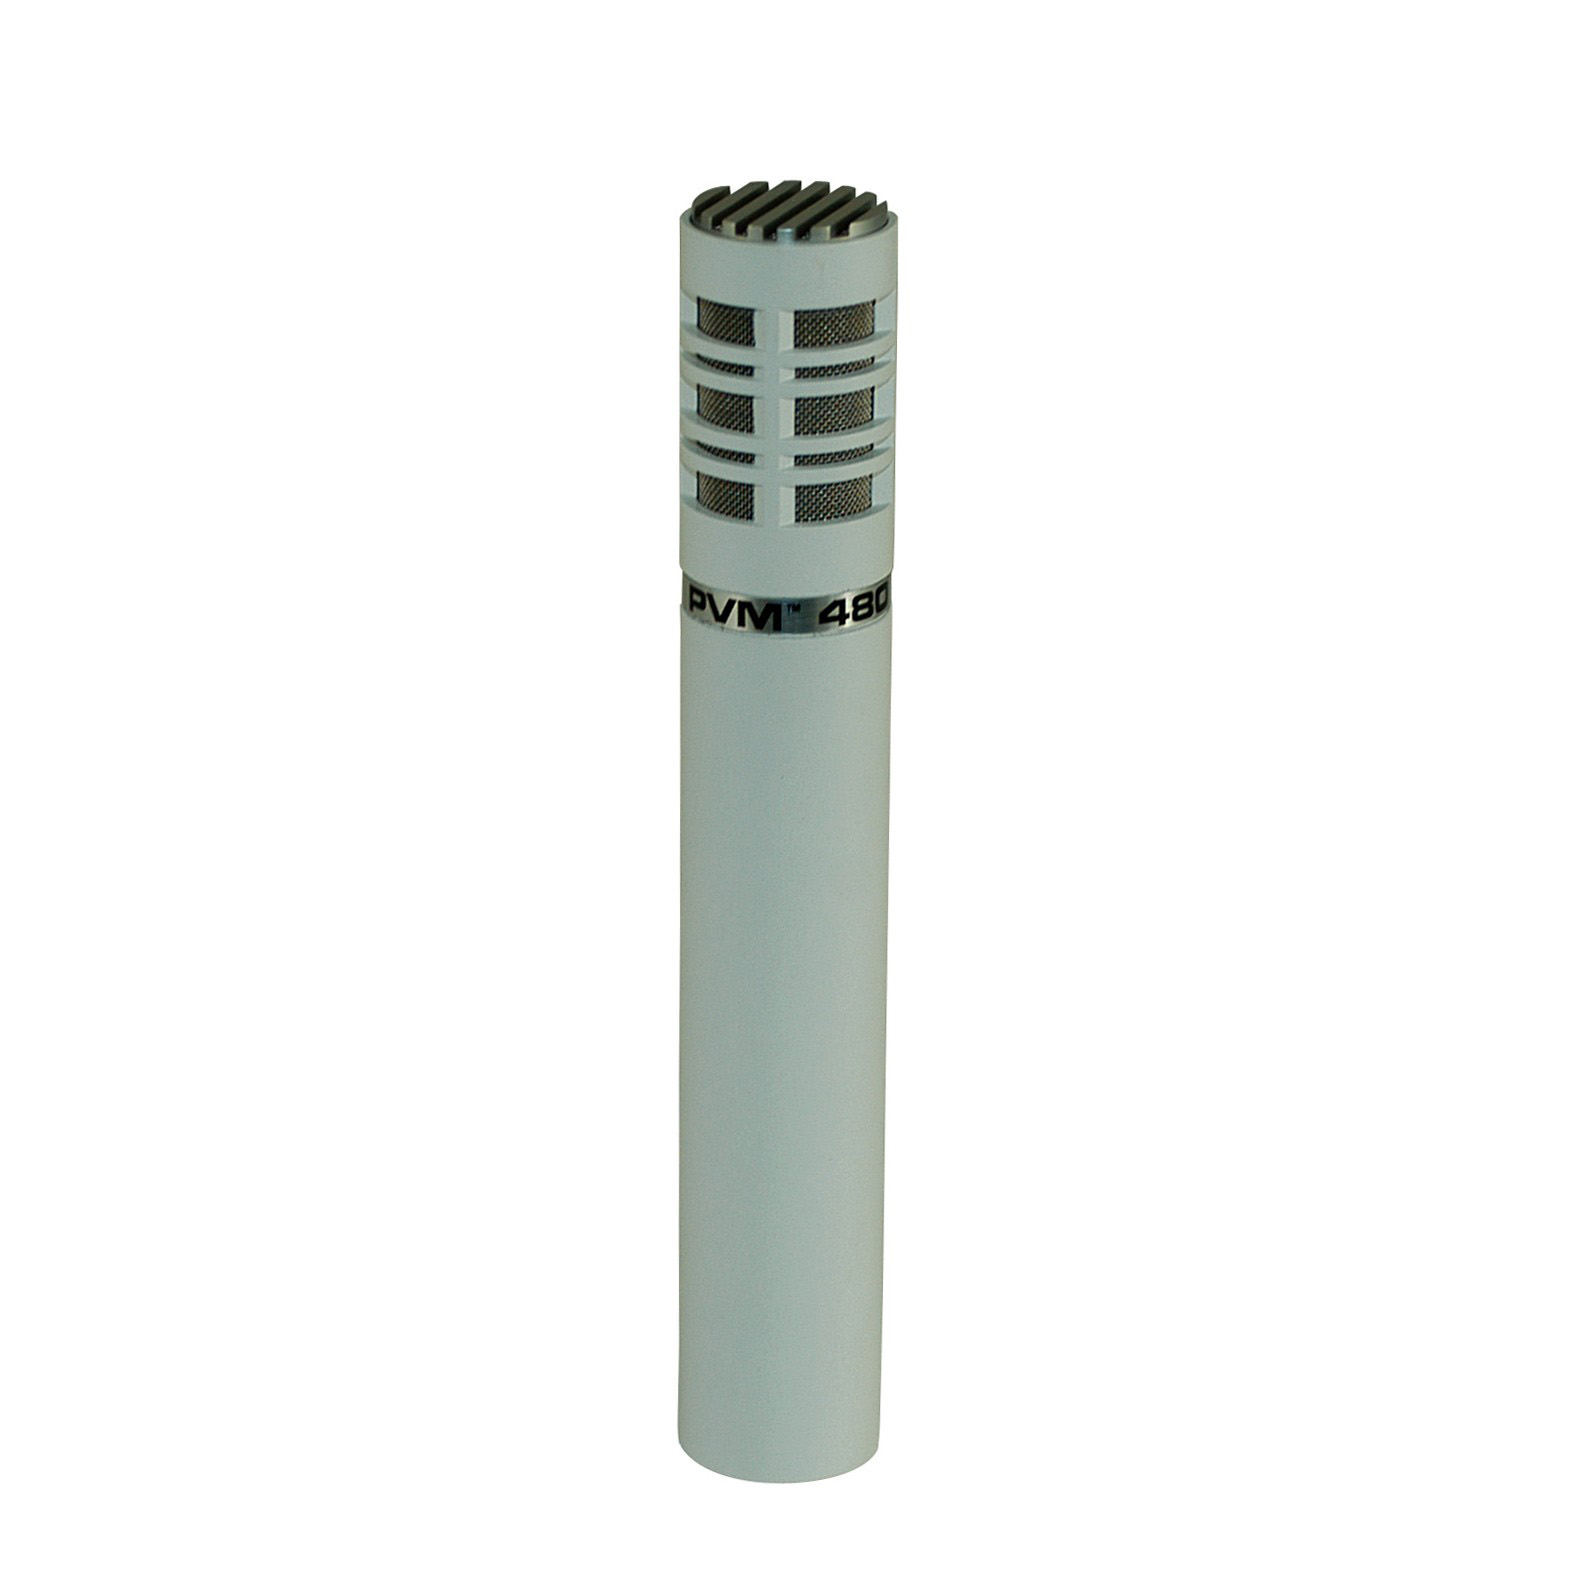 Peavey PVM 480 - White Конденсаторные микрофоны